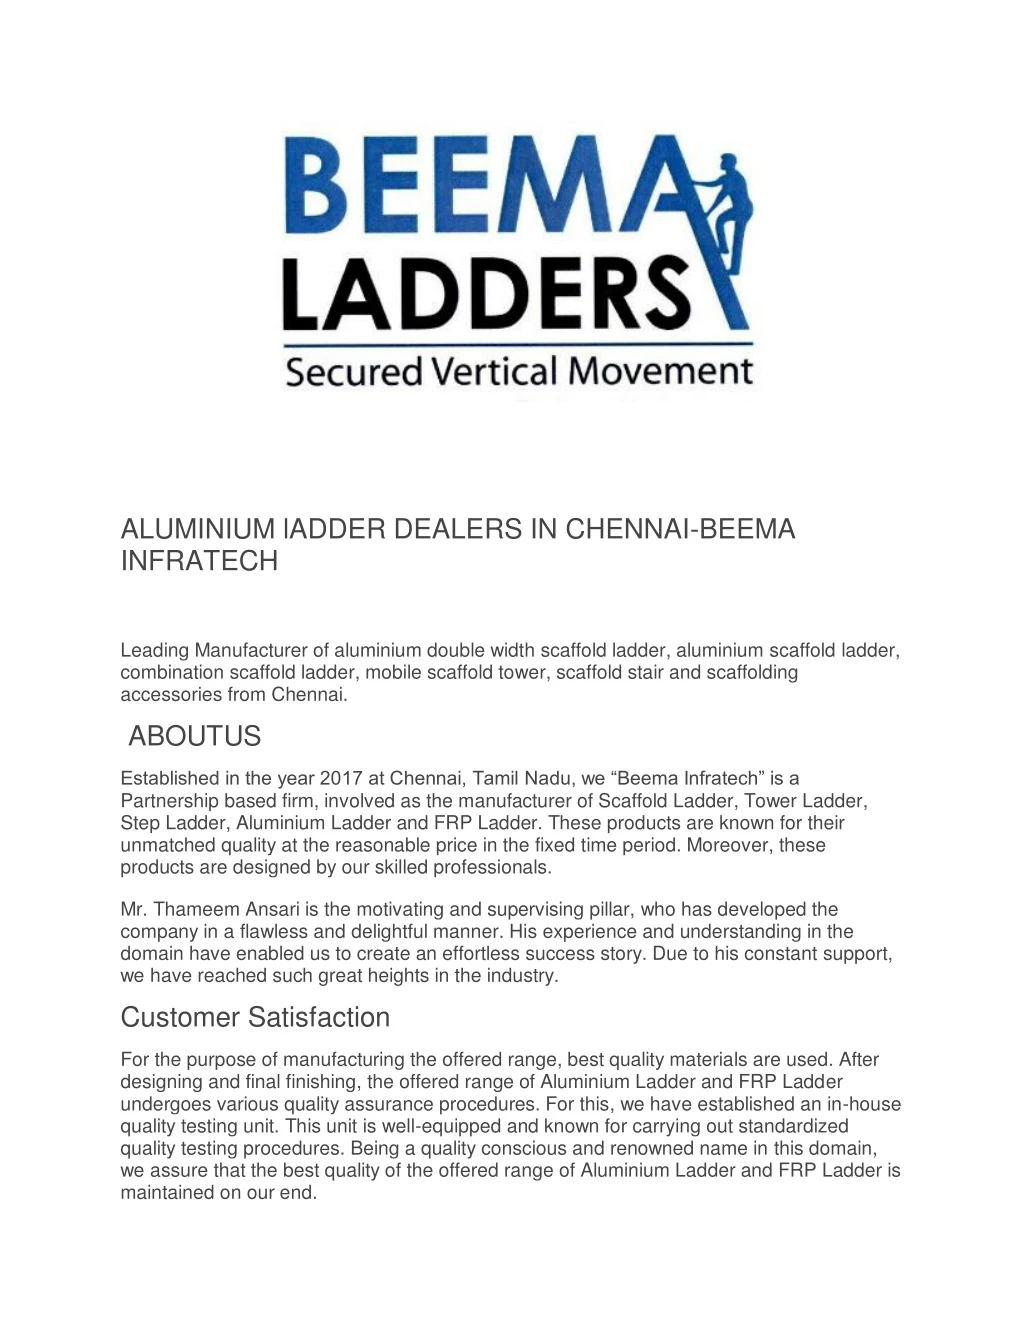 aluminium ladder dealers in chennai beema